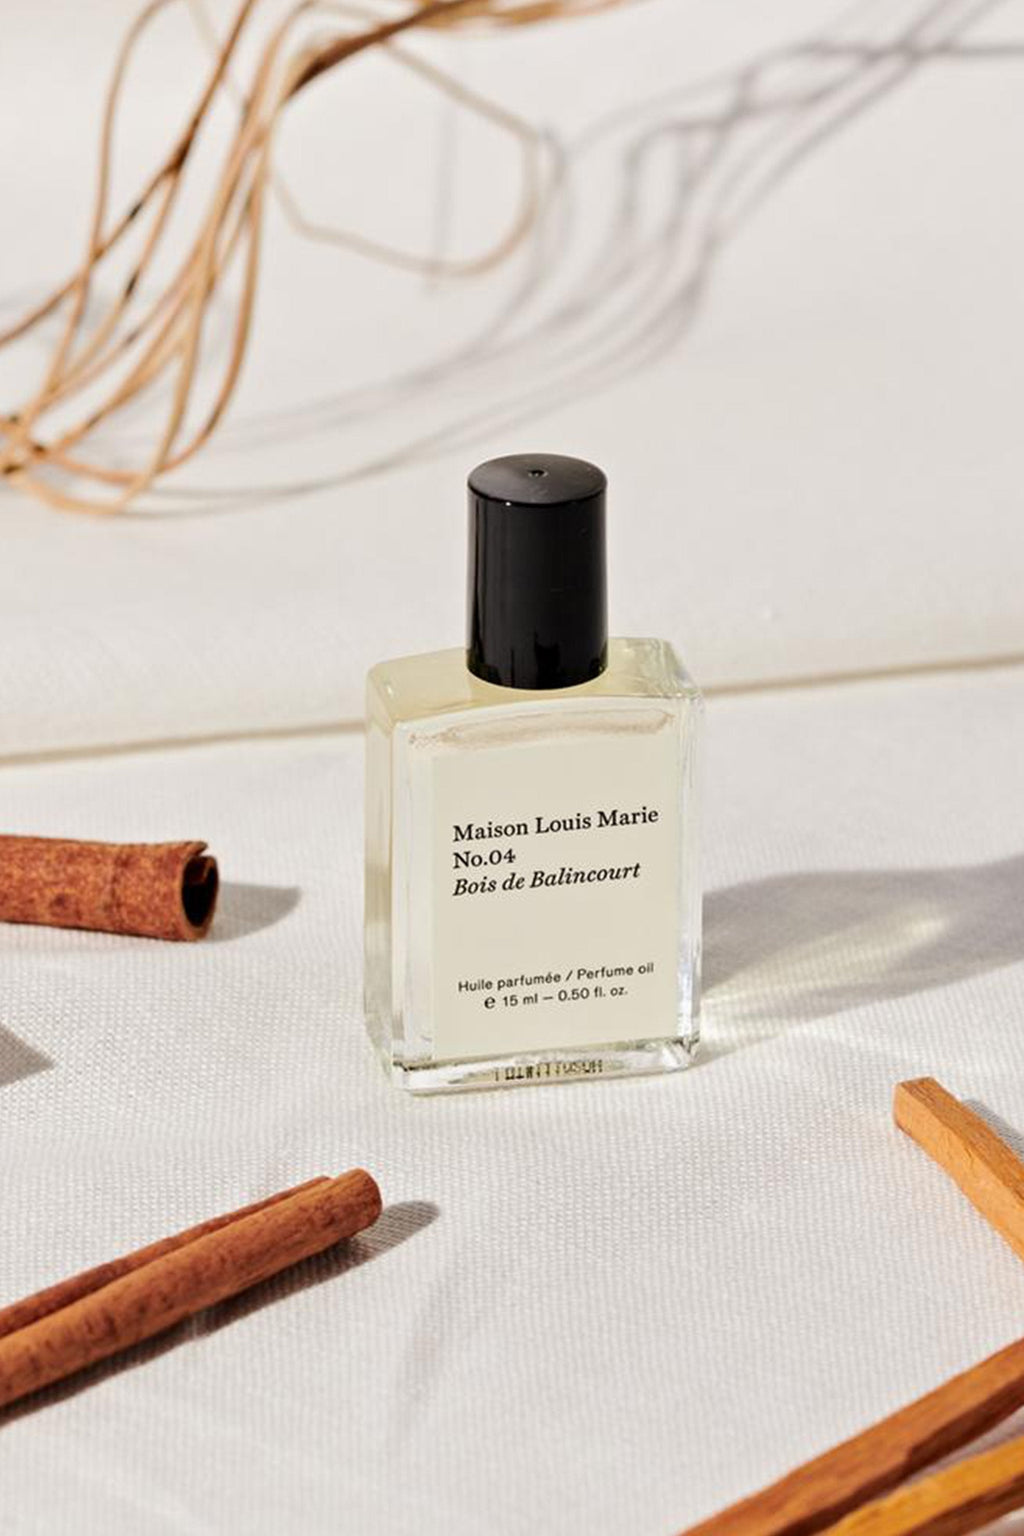 Maison Louis Marie - No 12 Bousval Perfume Oil